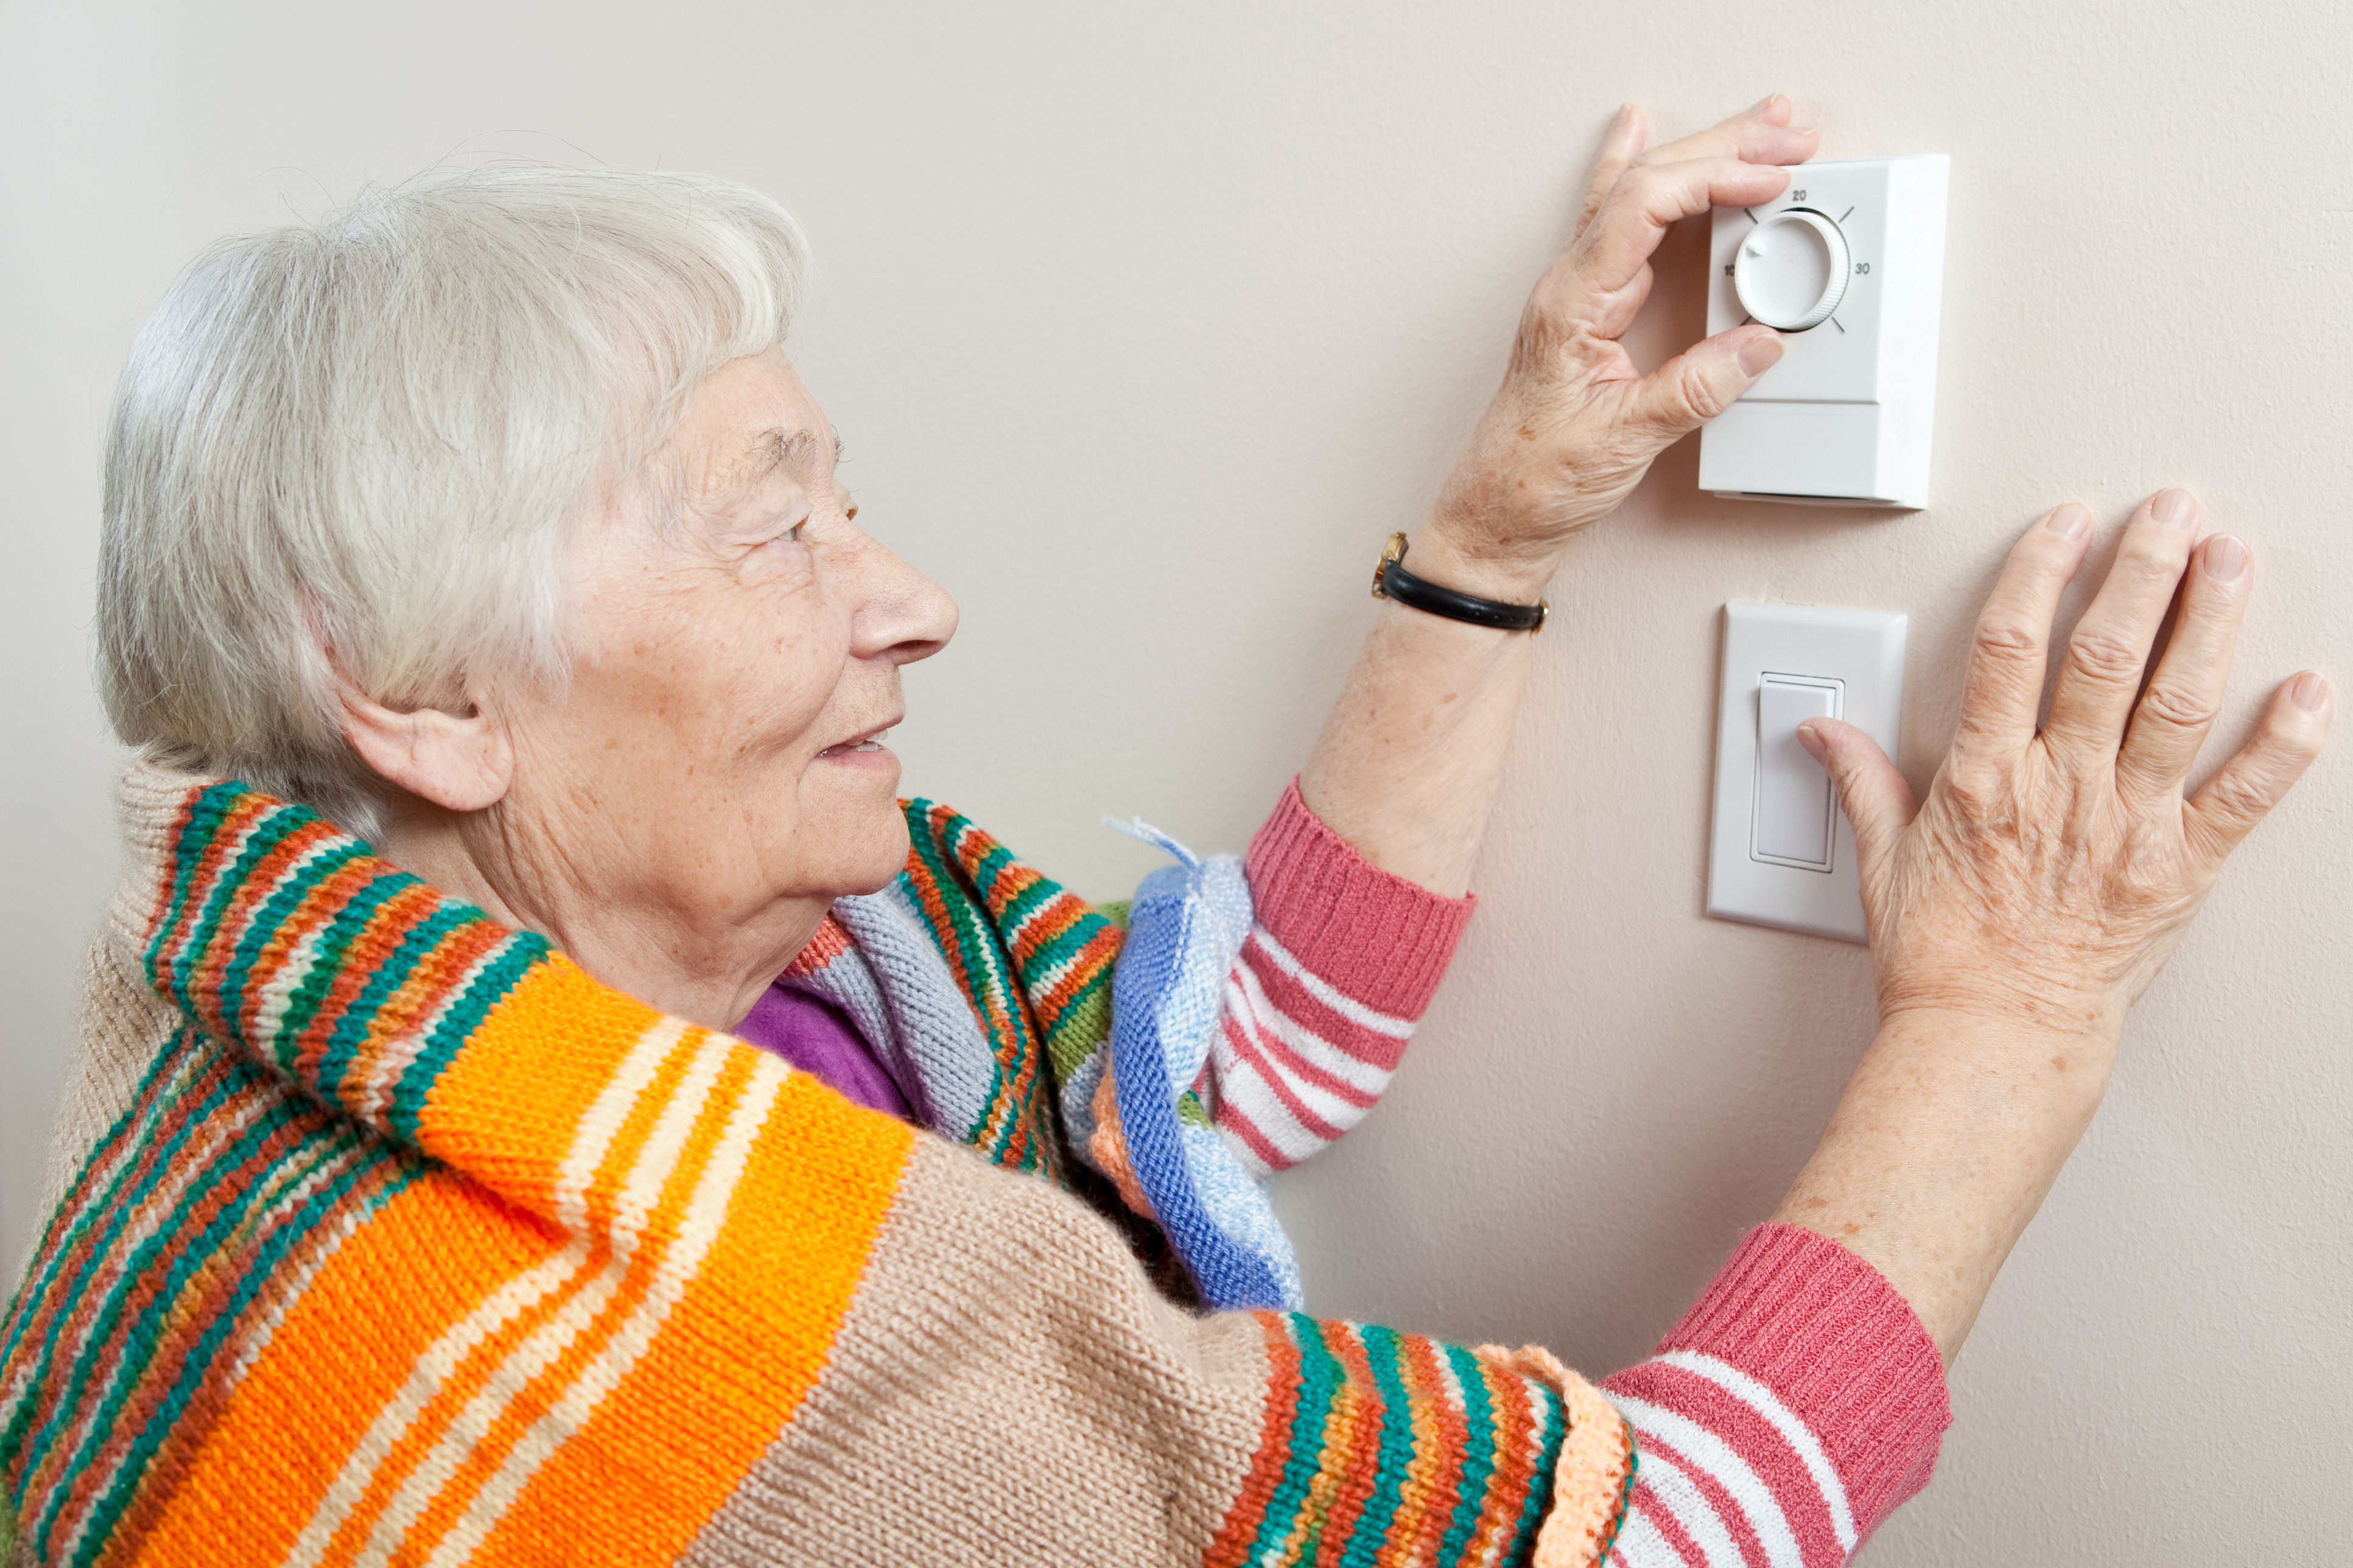 Ols Woman at Thermostat